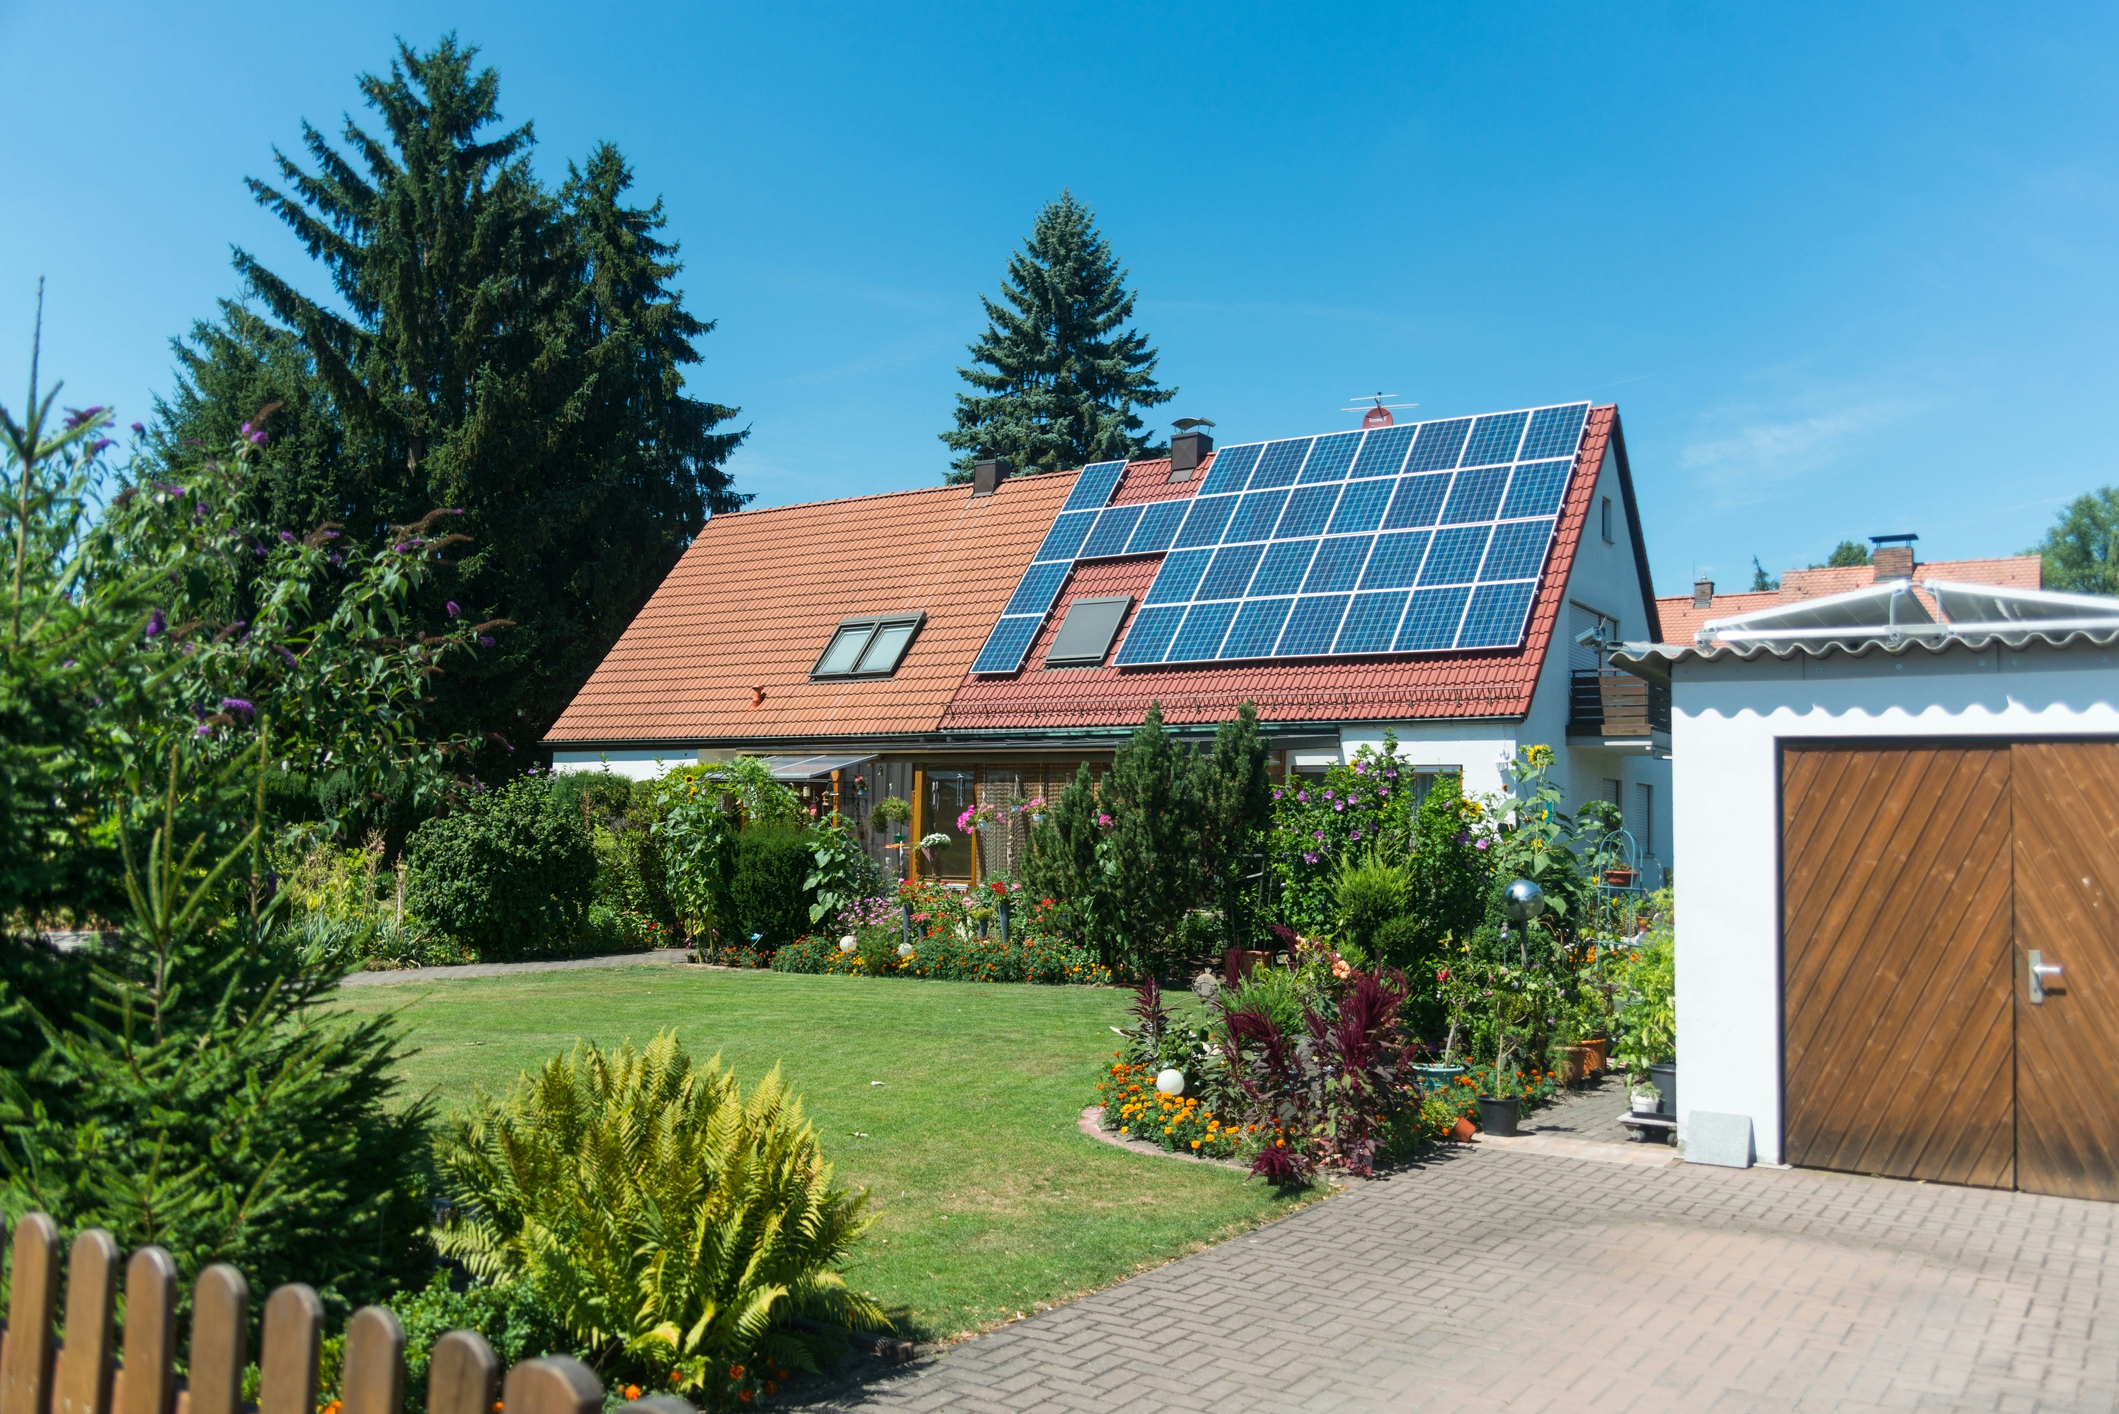 Blog Hero: How to Install Solar Panels